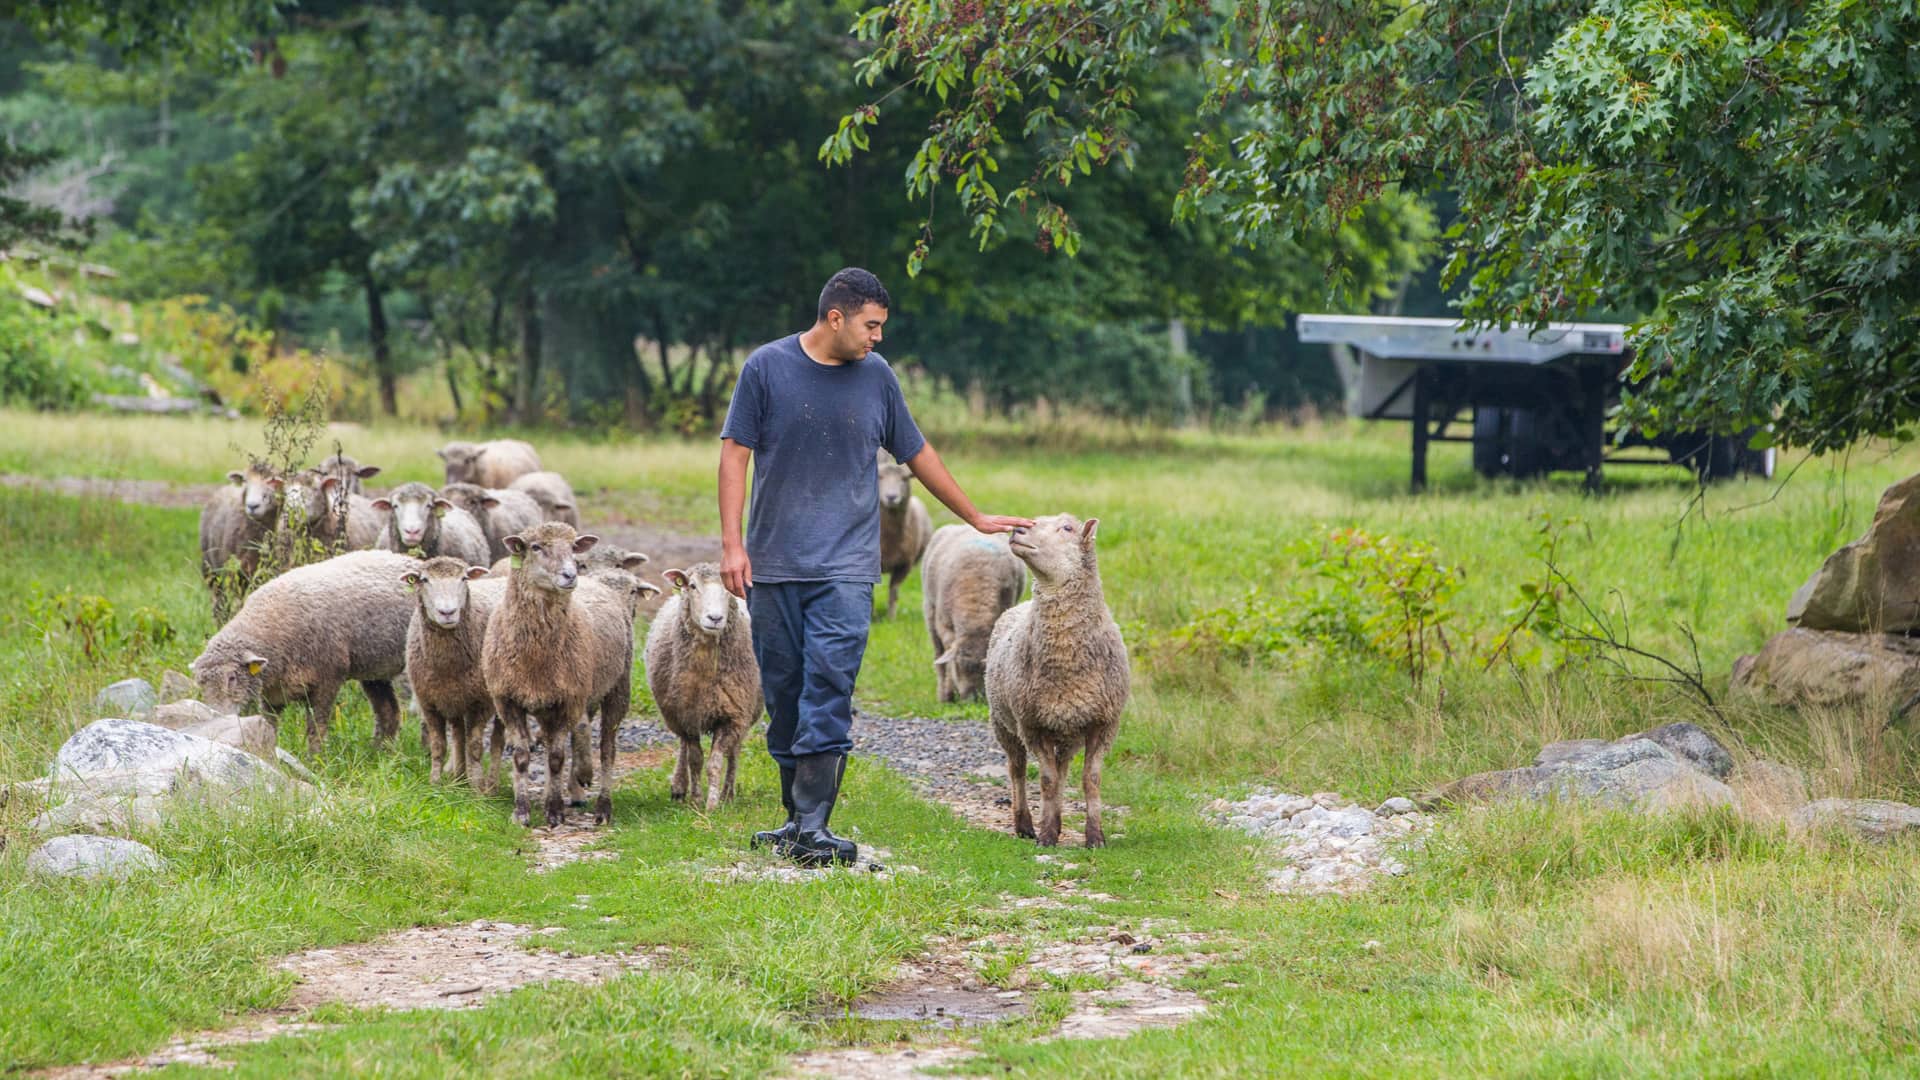 Victor walks the sheep on the farm.